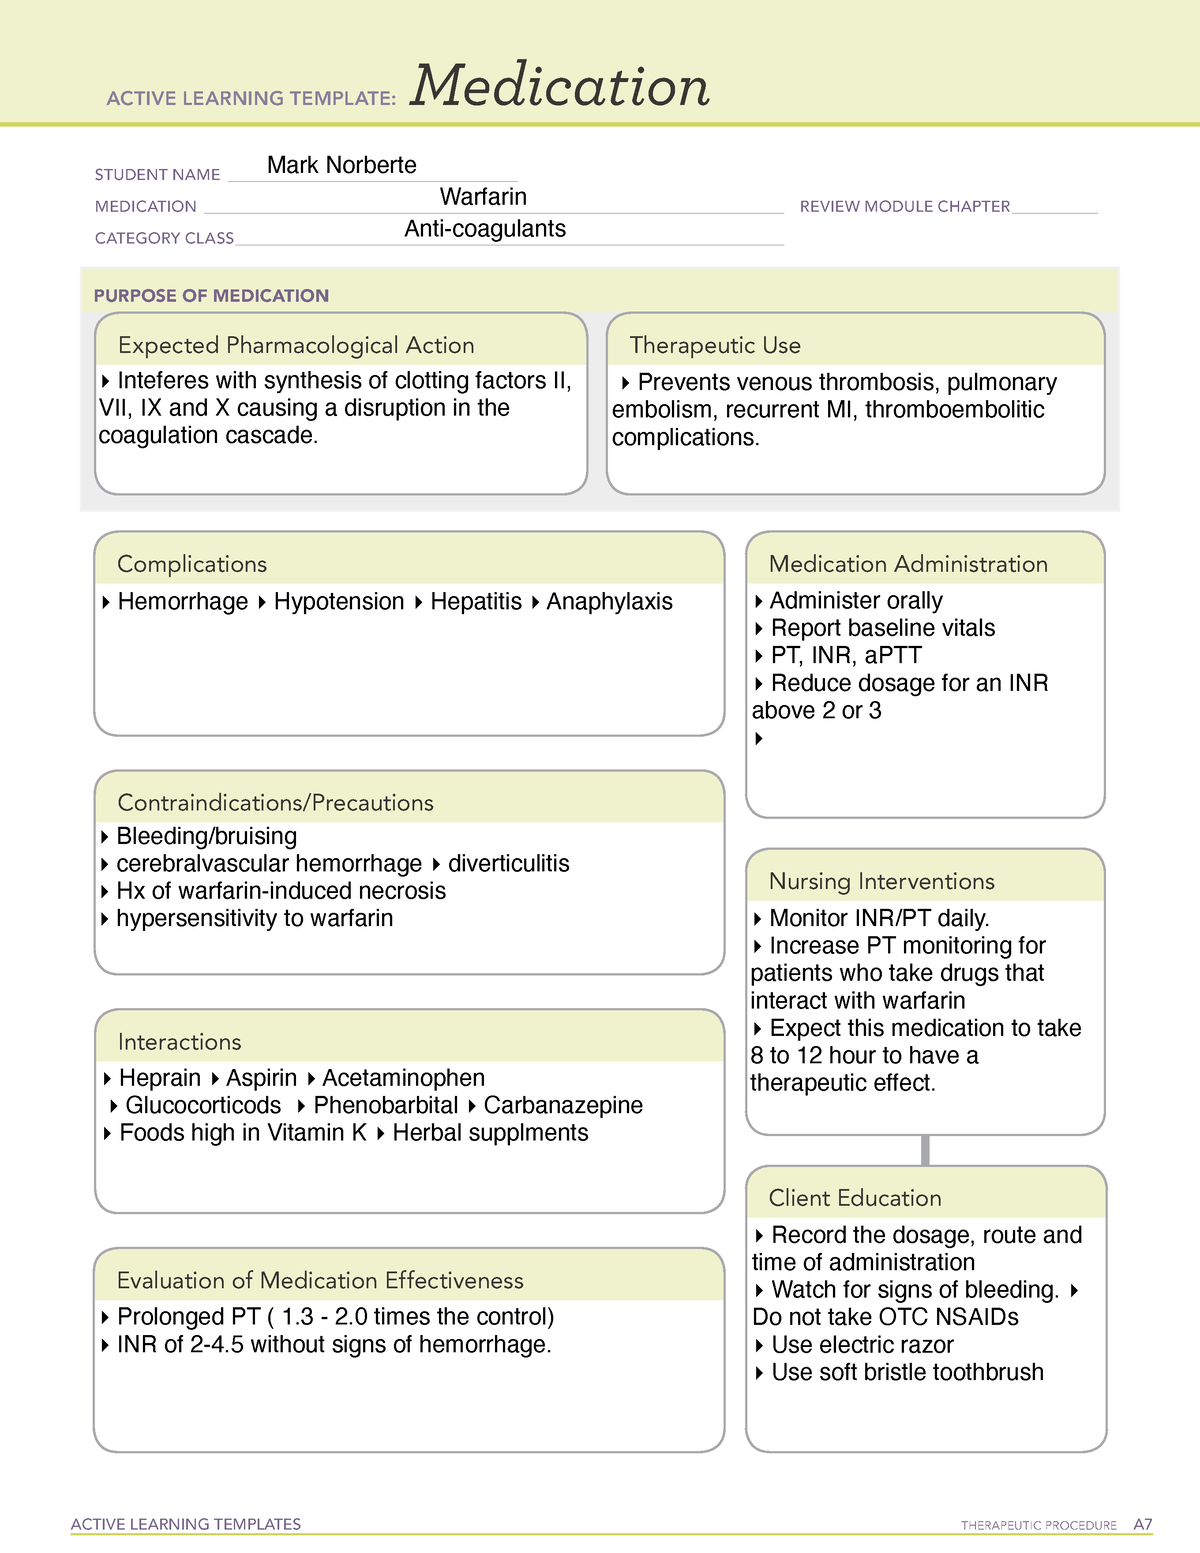 Warfarin pharmacology templates ACTIVE LEARNING TEMPLATES